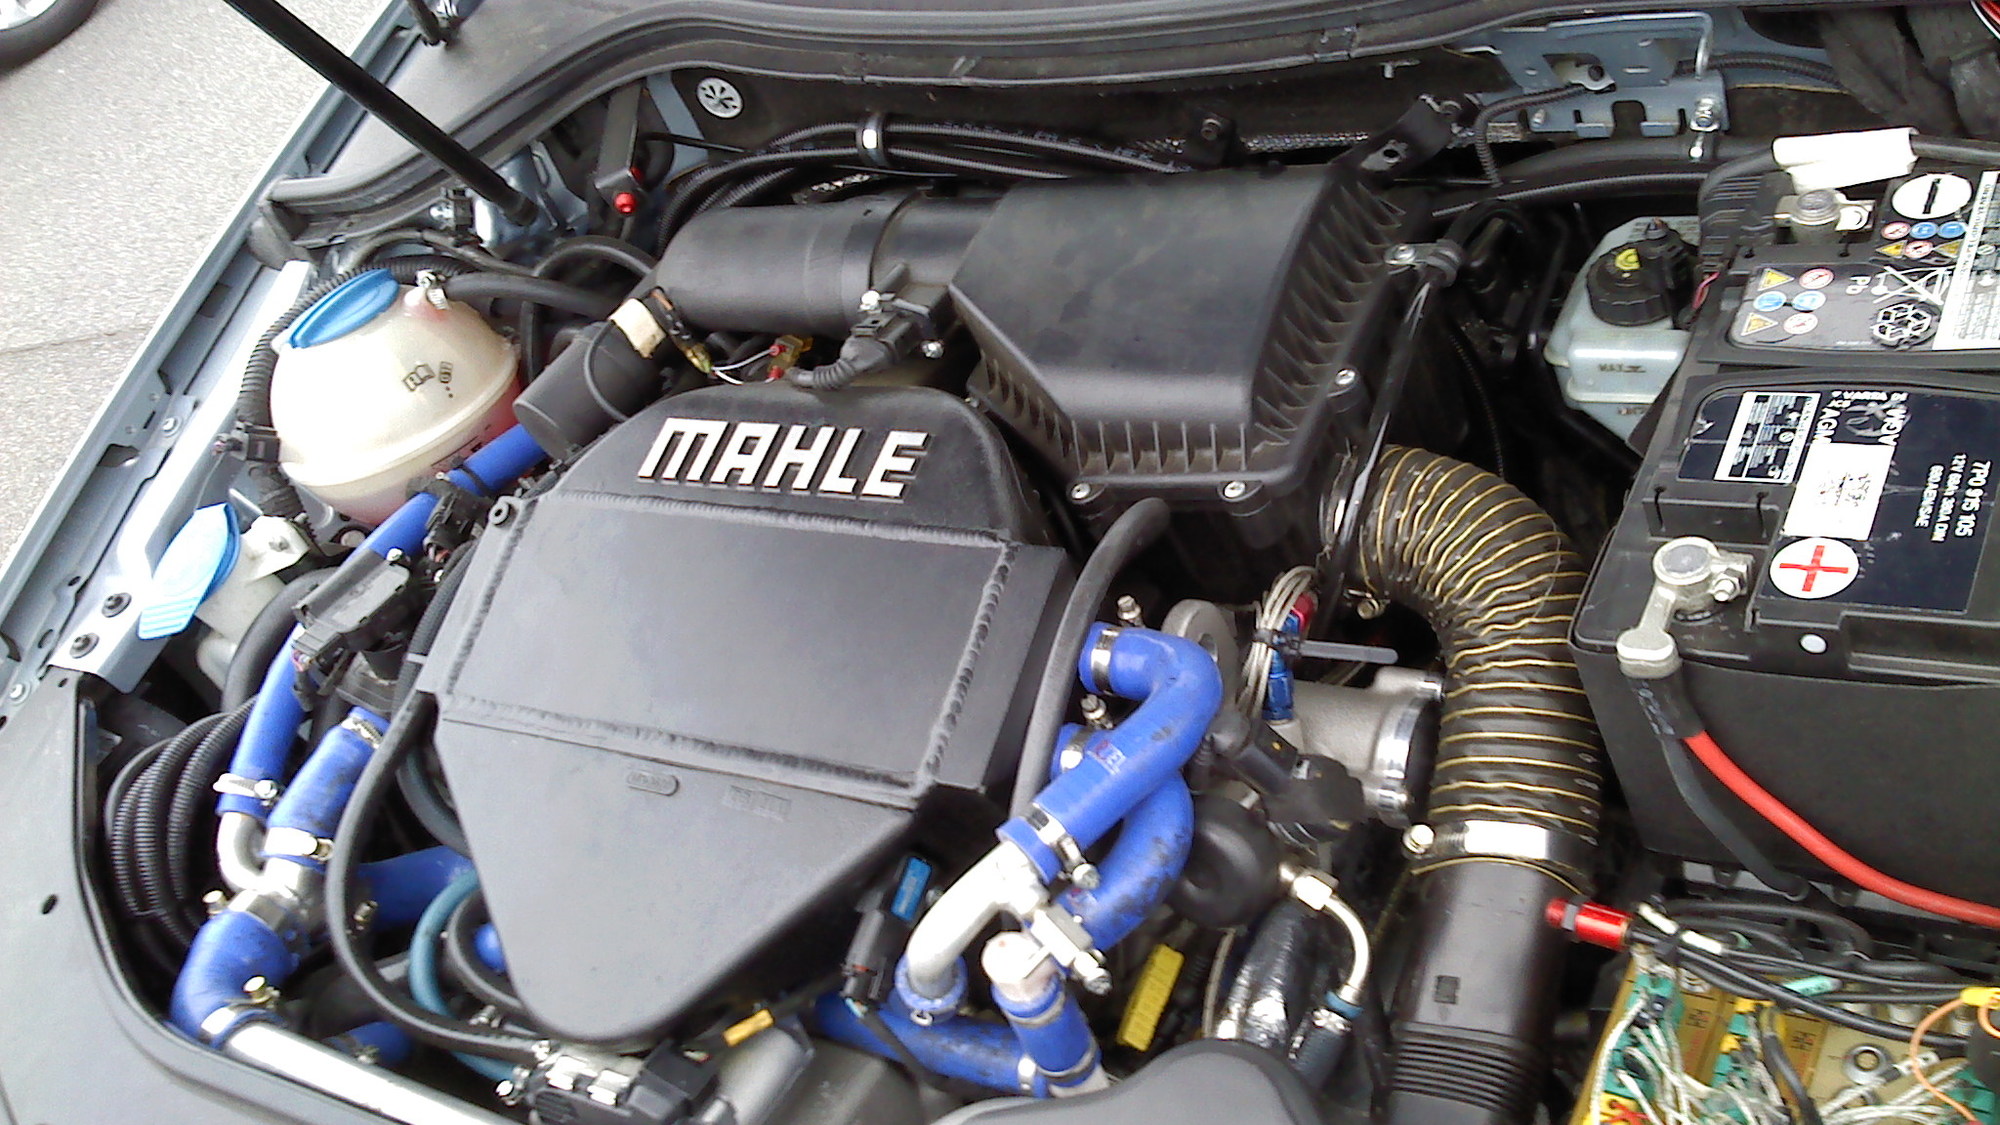 2009 VW Passat wagon test car w/Bosch-Mahle turbocharged 1.2-liter, 3-cyl engine, from WardsAuto.com